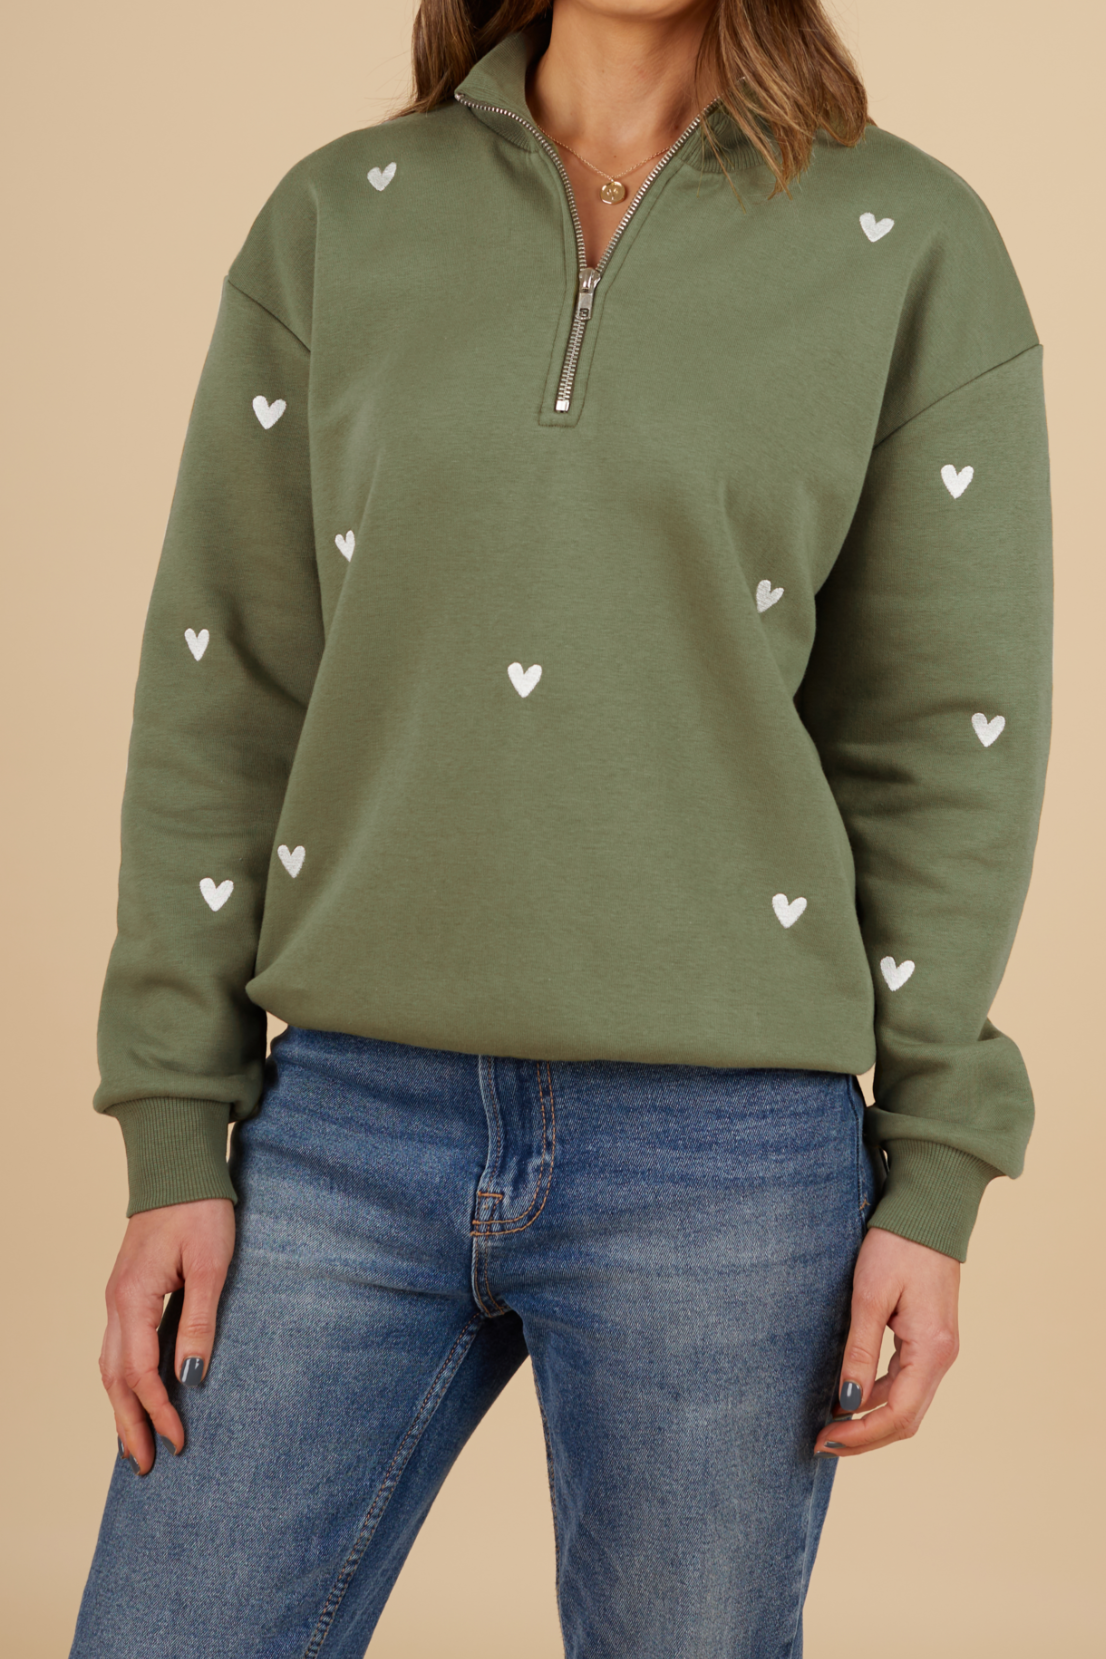 O&F Olive Heart Embroidered Quarter Zip Sweatshirt